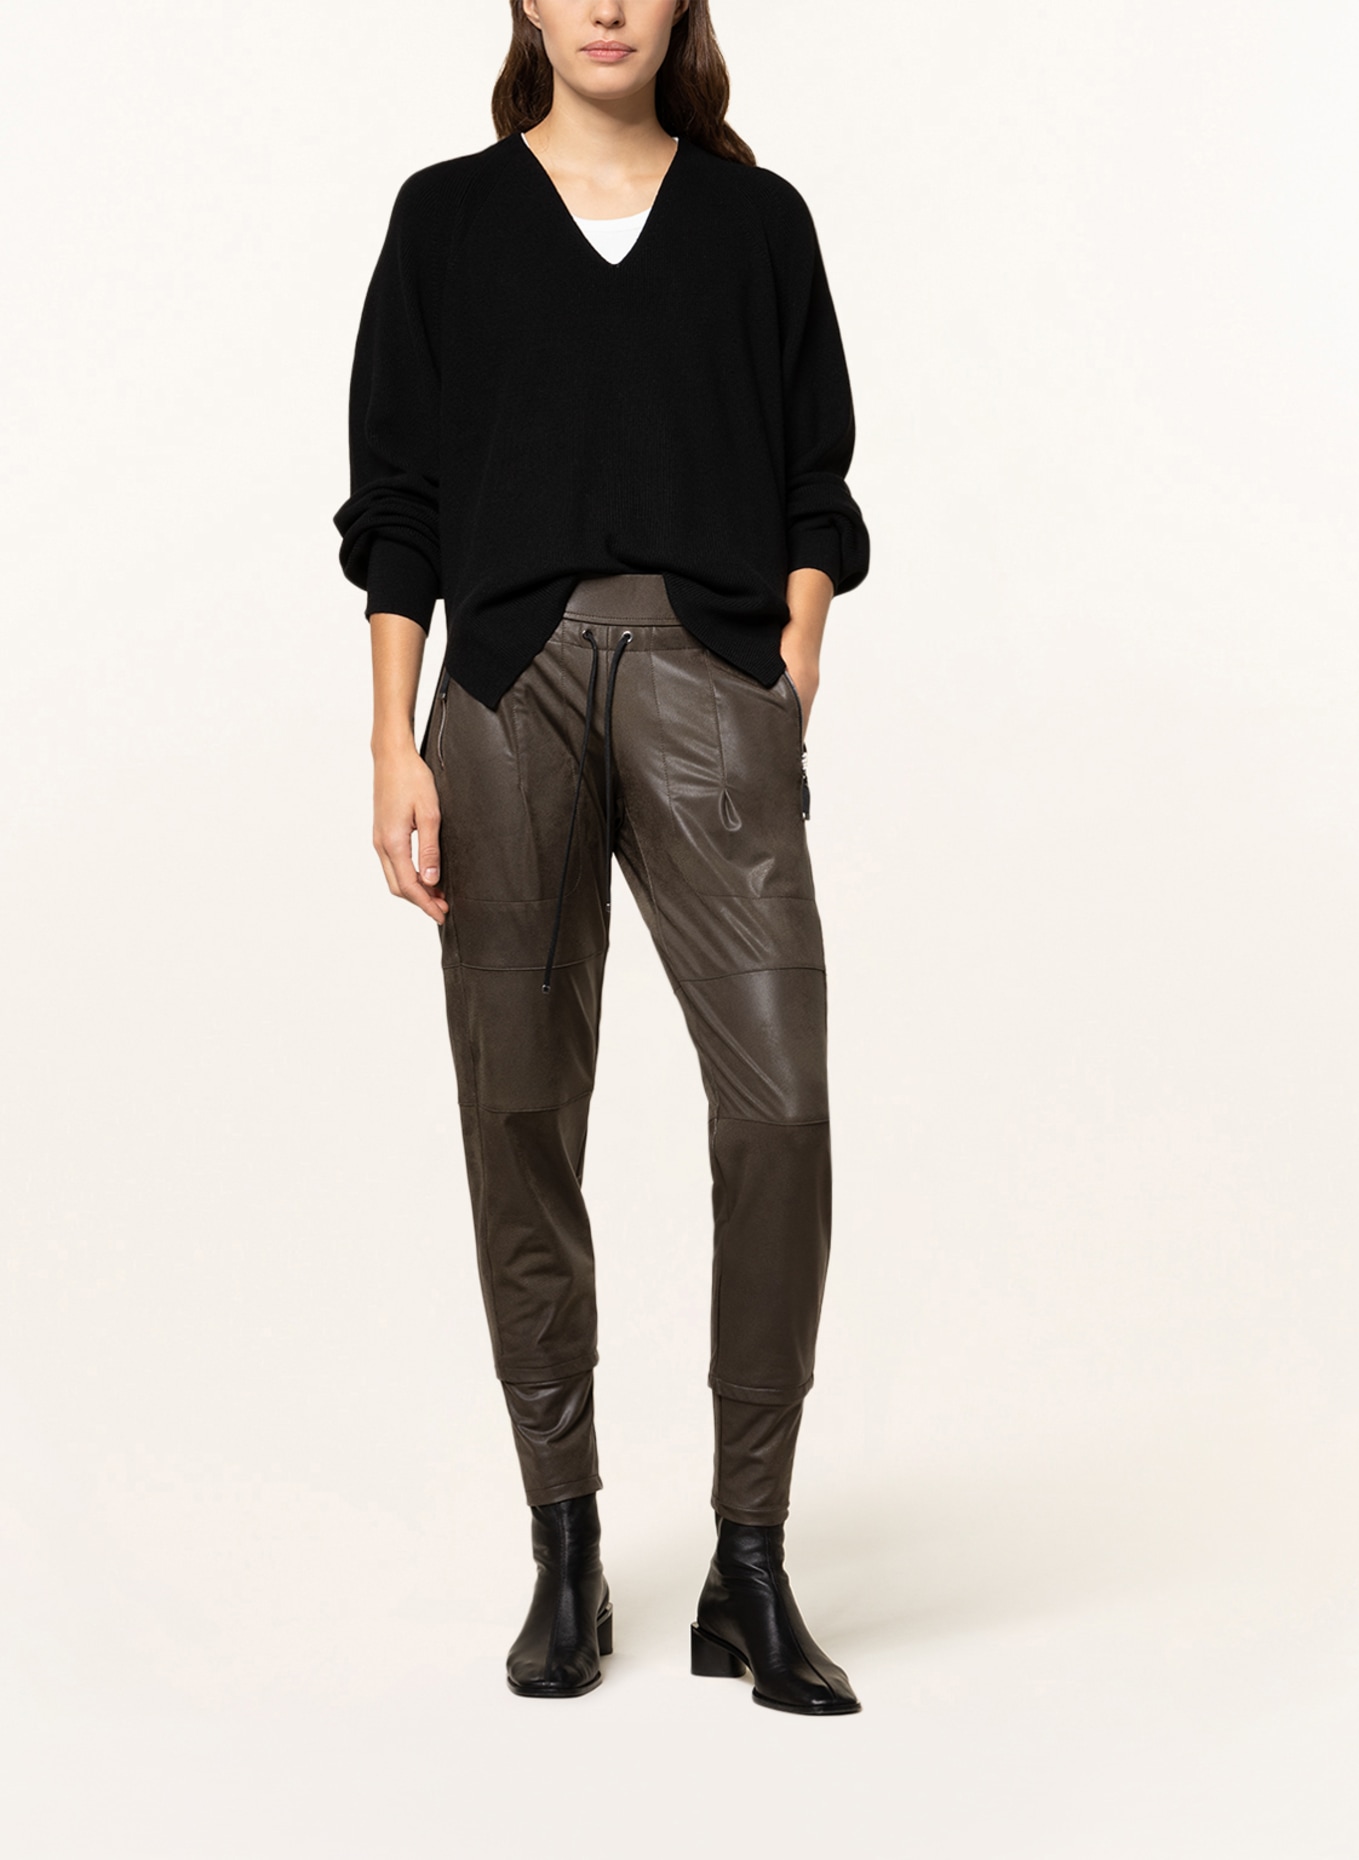 RAFFAELLO ROSSI Trousers CANDY in leather look, Color: KHAKI (Image 2)